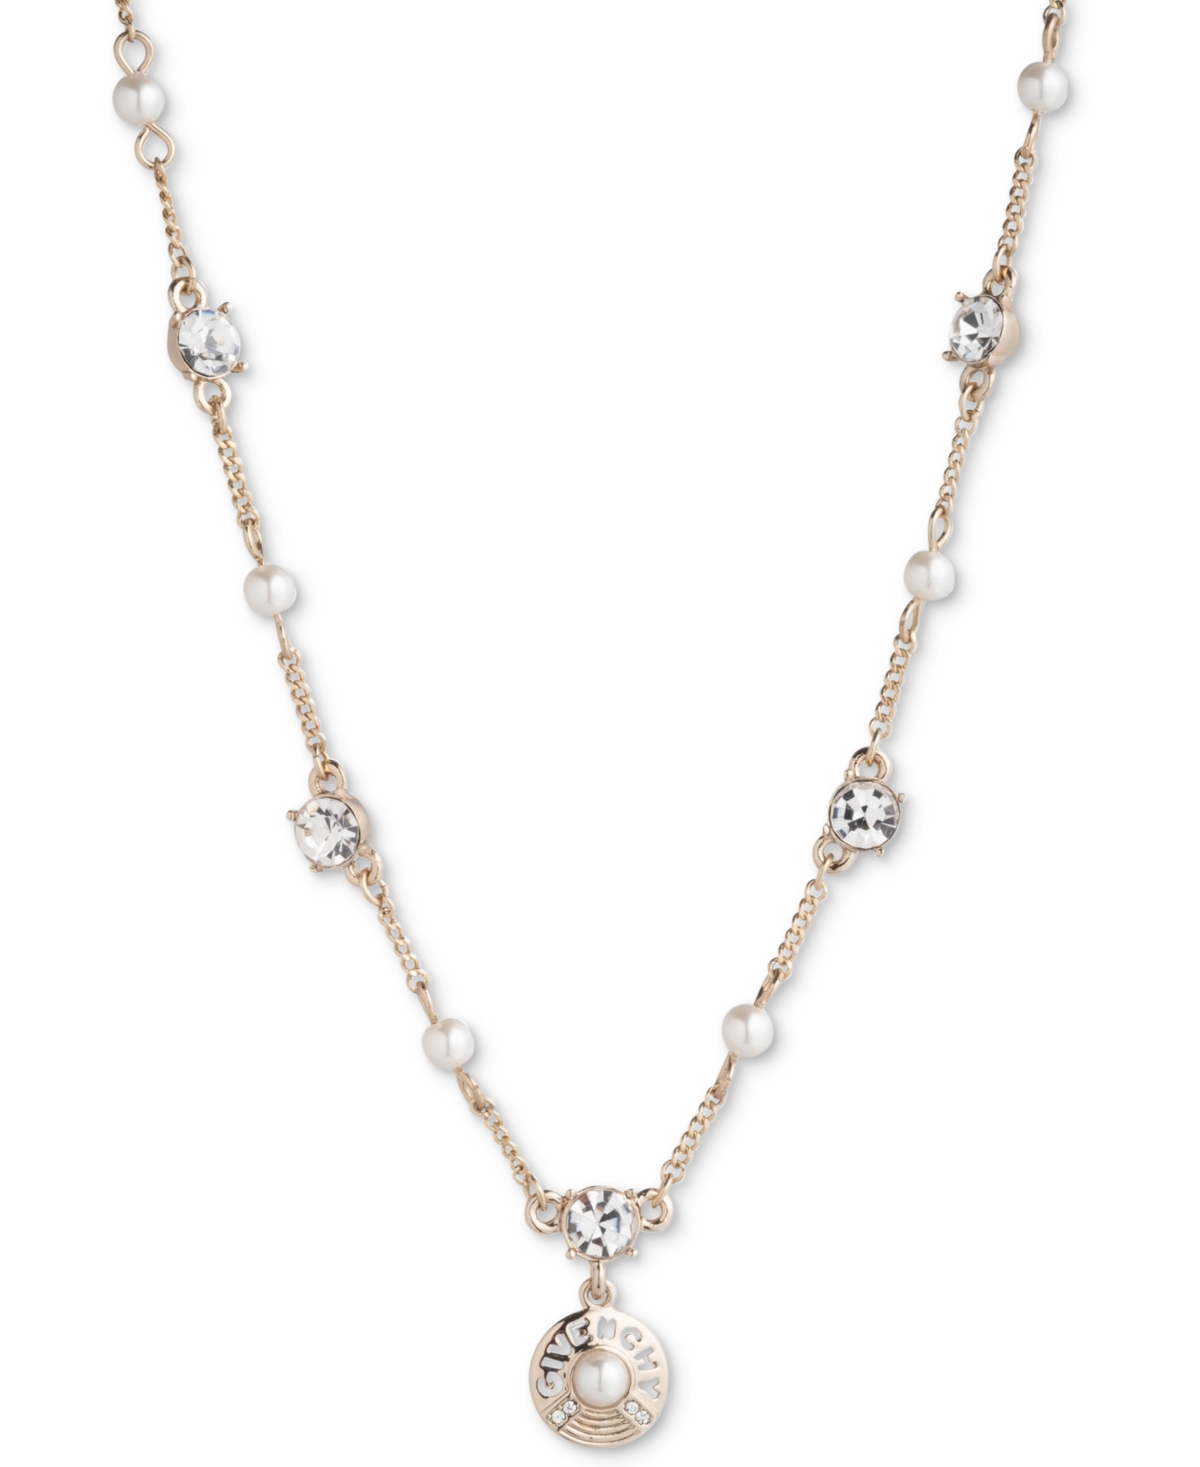 Gold-Tone Imitation Pearl & Crystal Logo Pendant Necklace, 16" + 3" extender - White